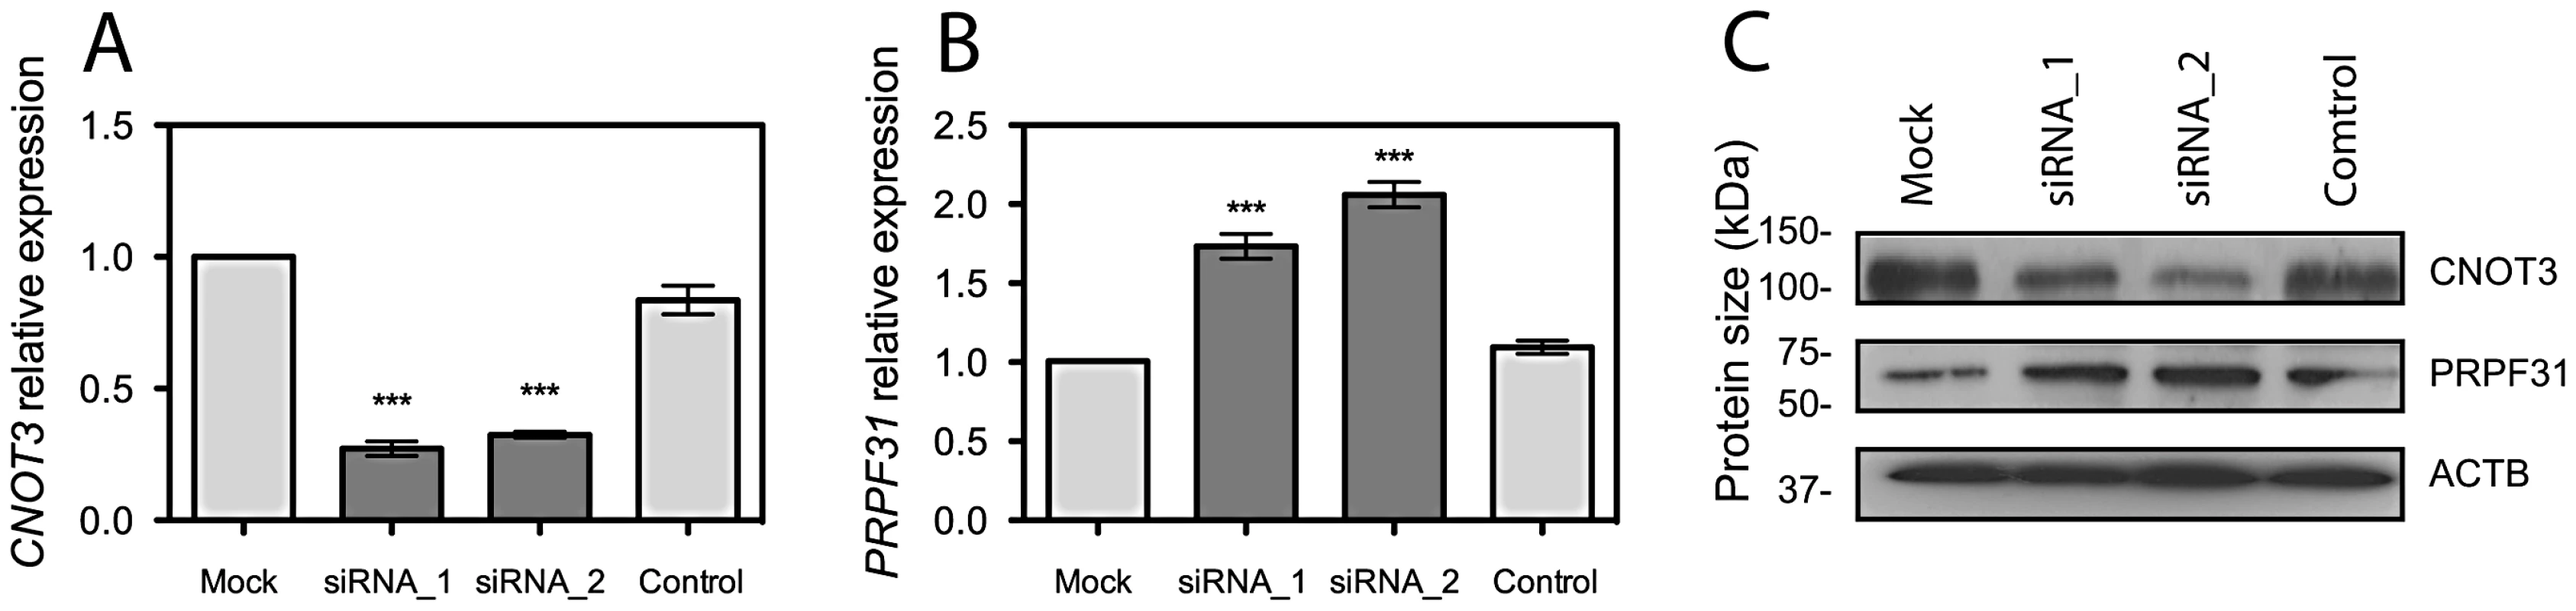 <i>CNOT3</i> silencing stimulates <i>PRPF31</i> expression in ARPE-19 cells.